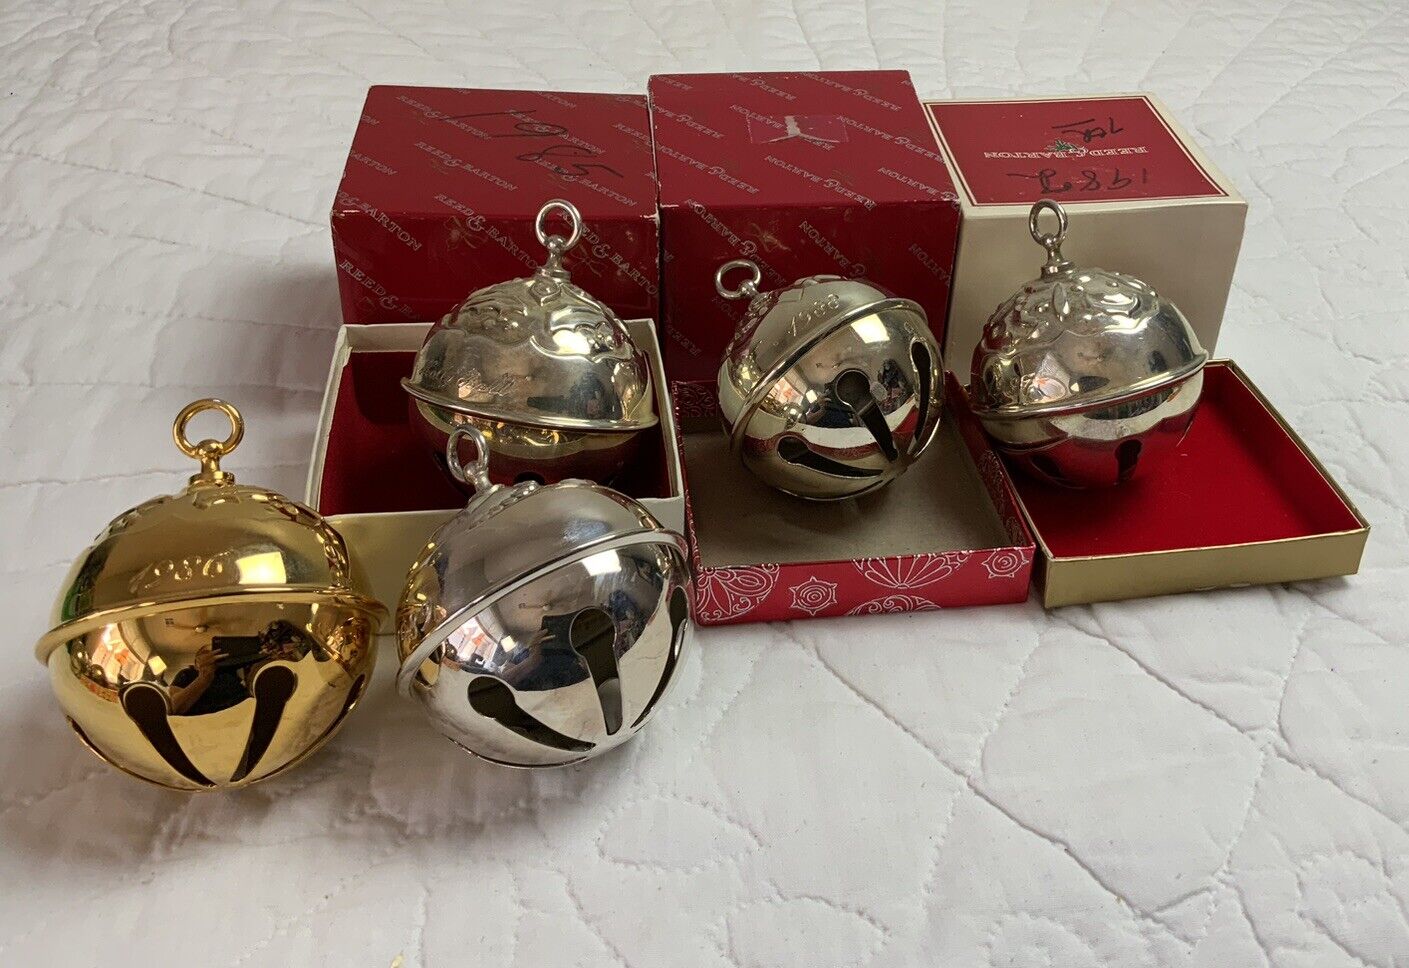 5 Vintage Christmas Sleigh Bells, Reed & Barton, Silver Plate, 1986 - 1989